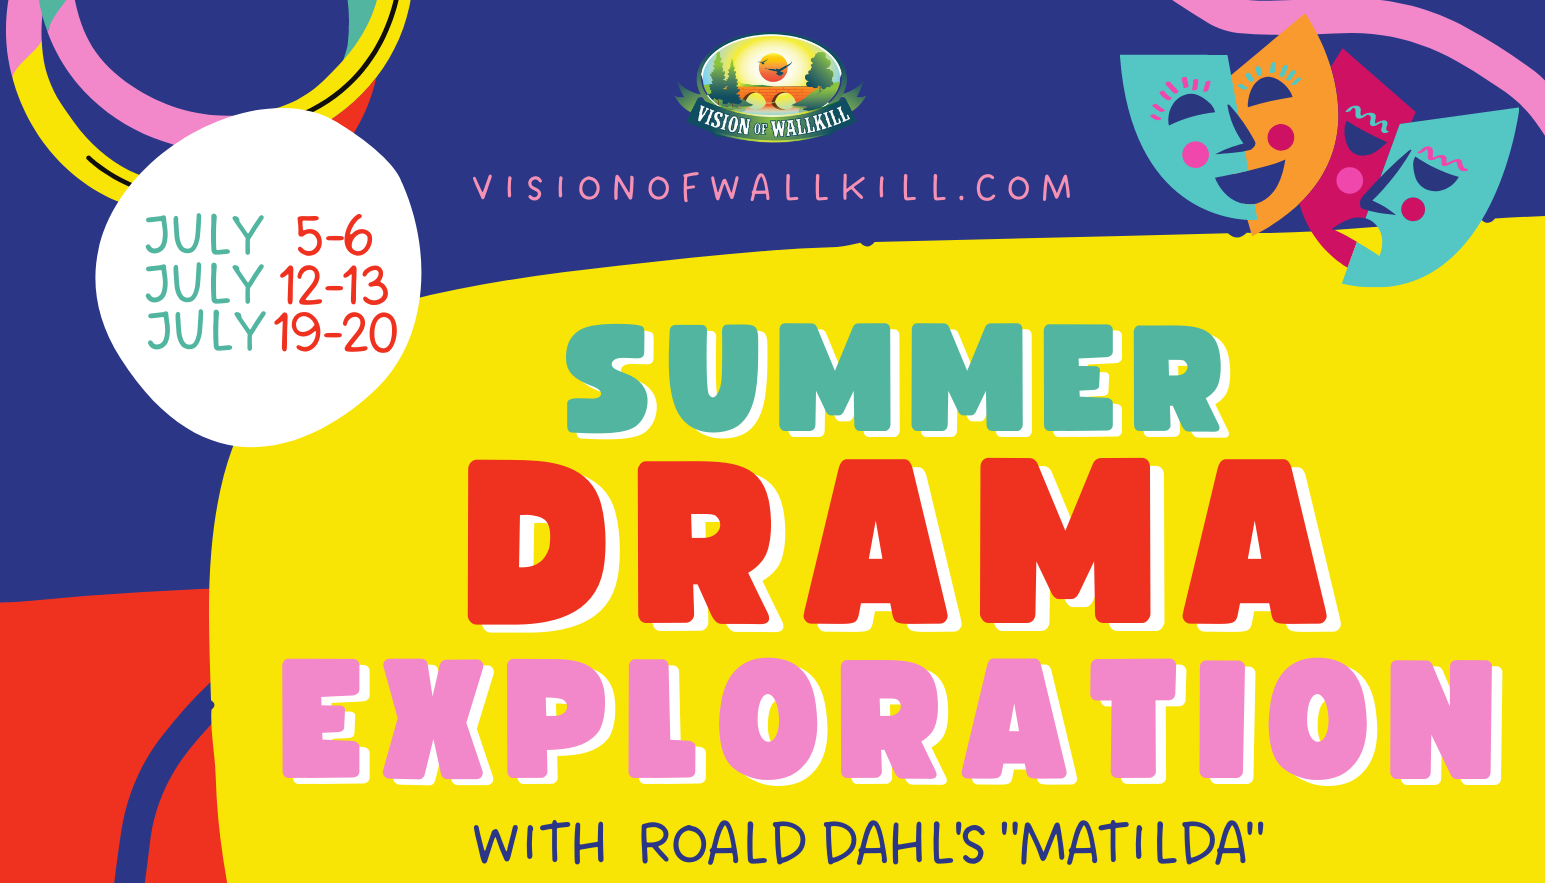 Summer Drama Exploration